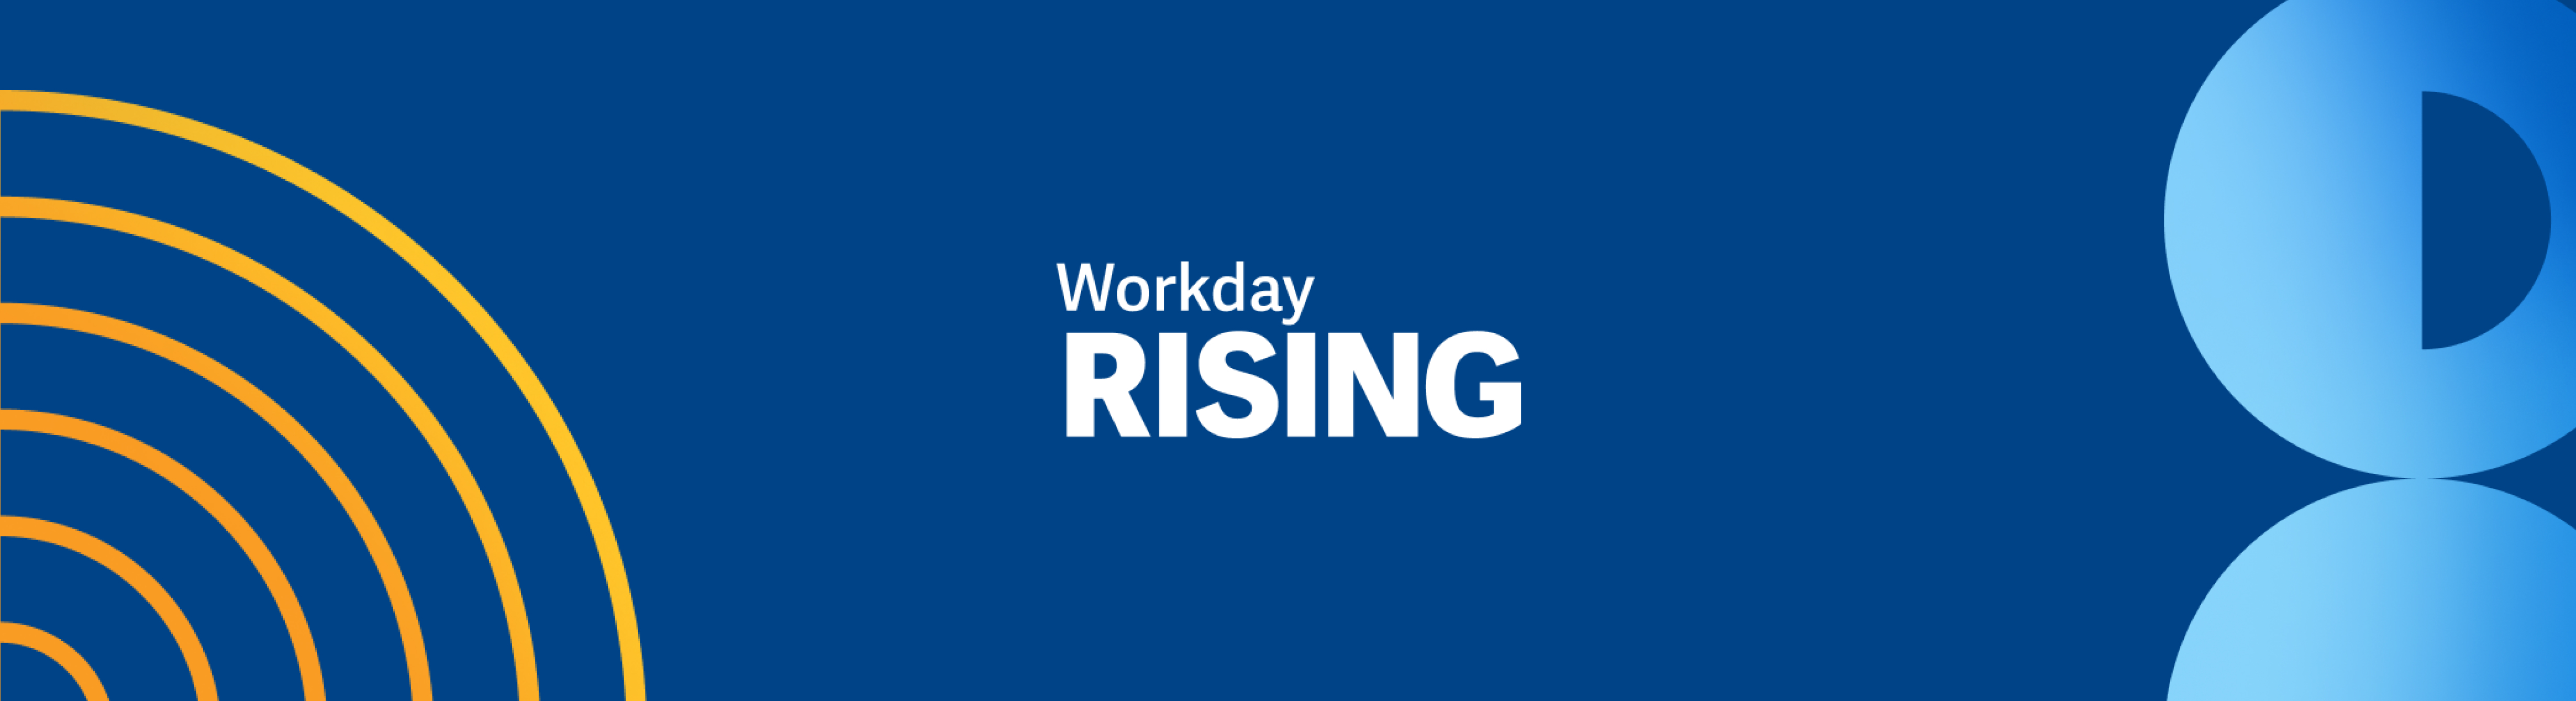 Workday Rising 2023